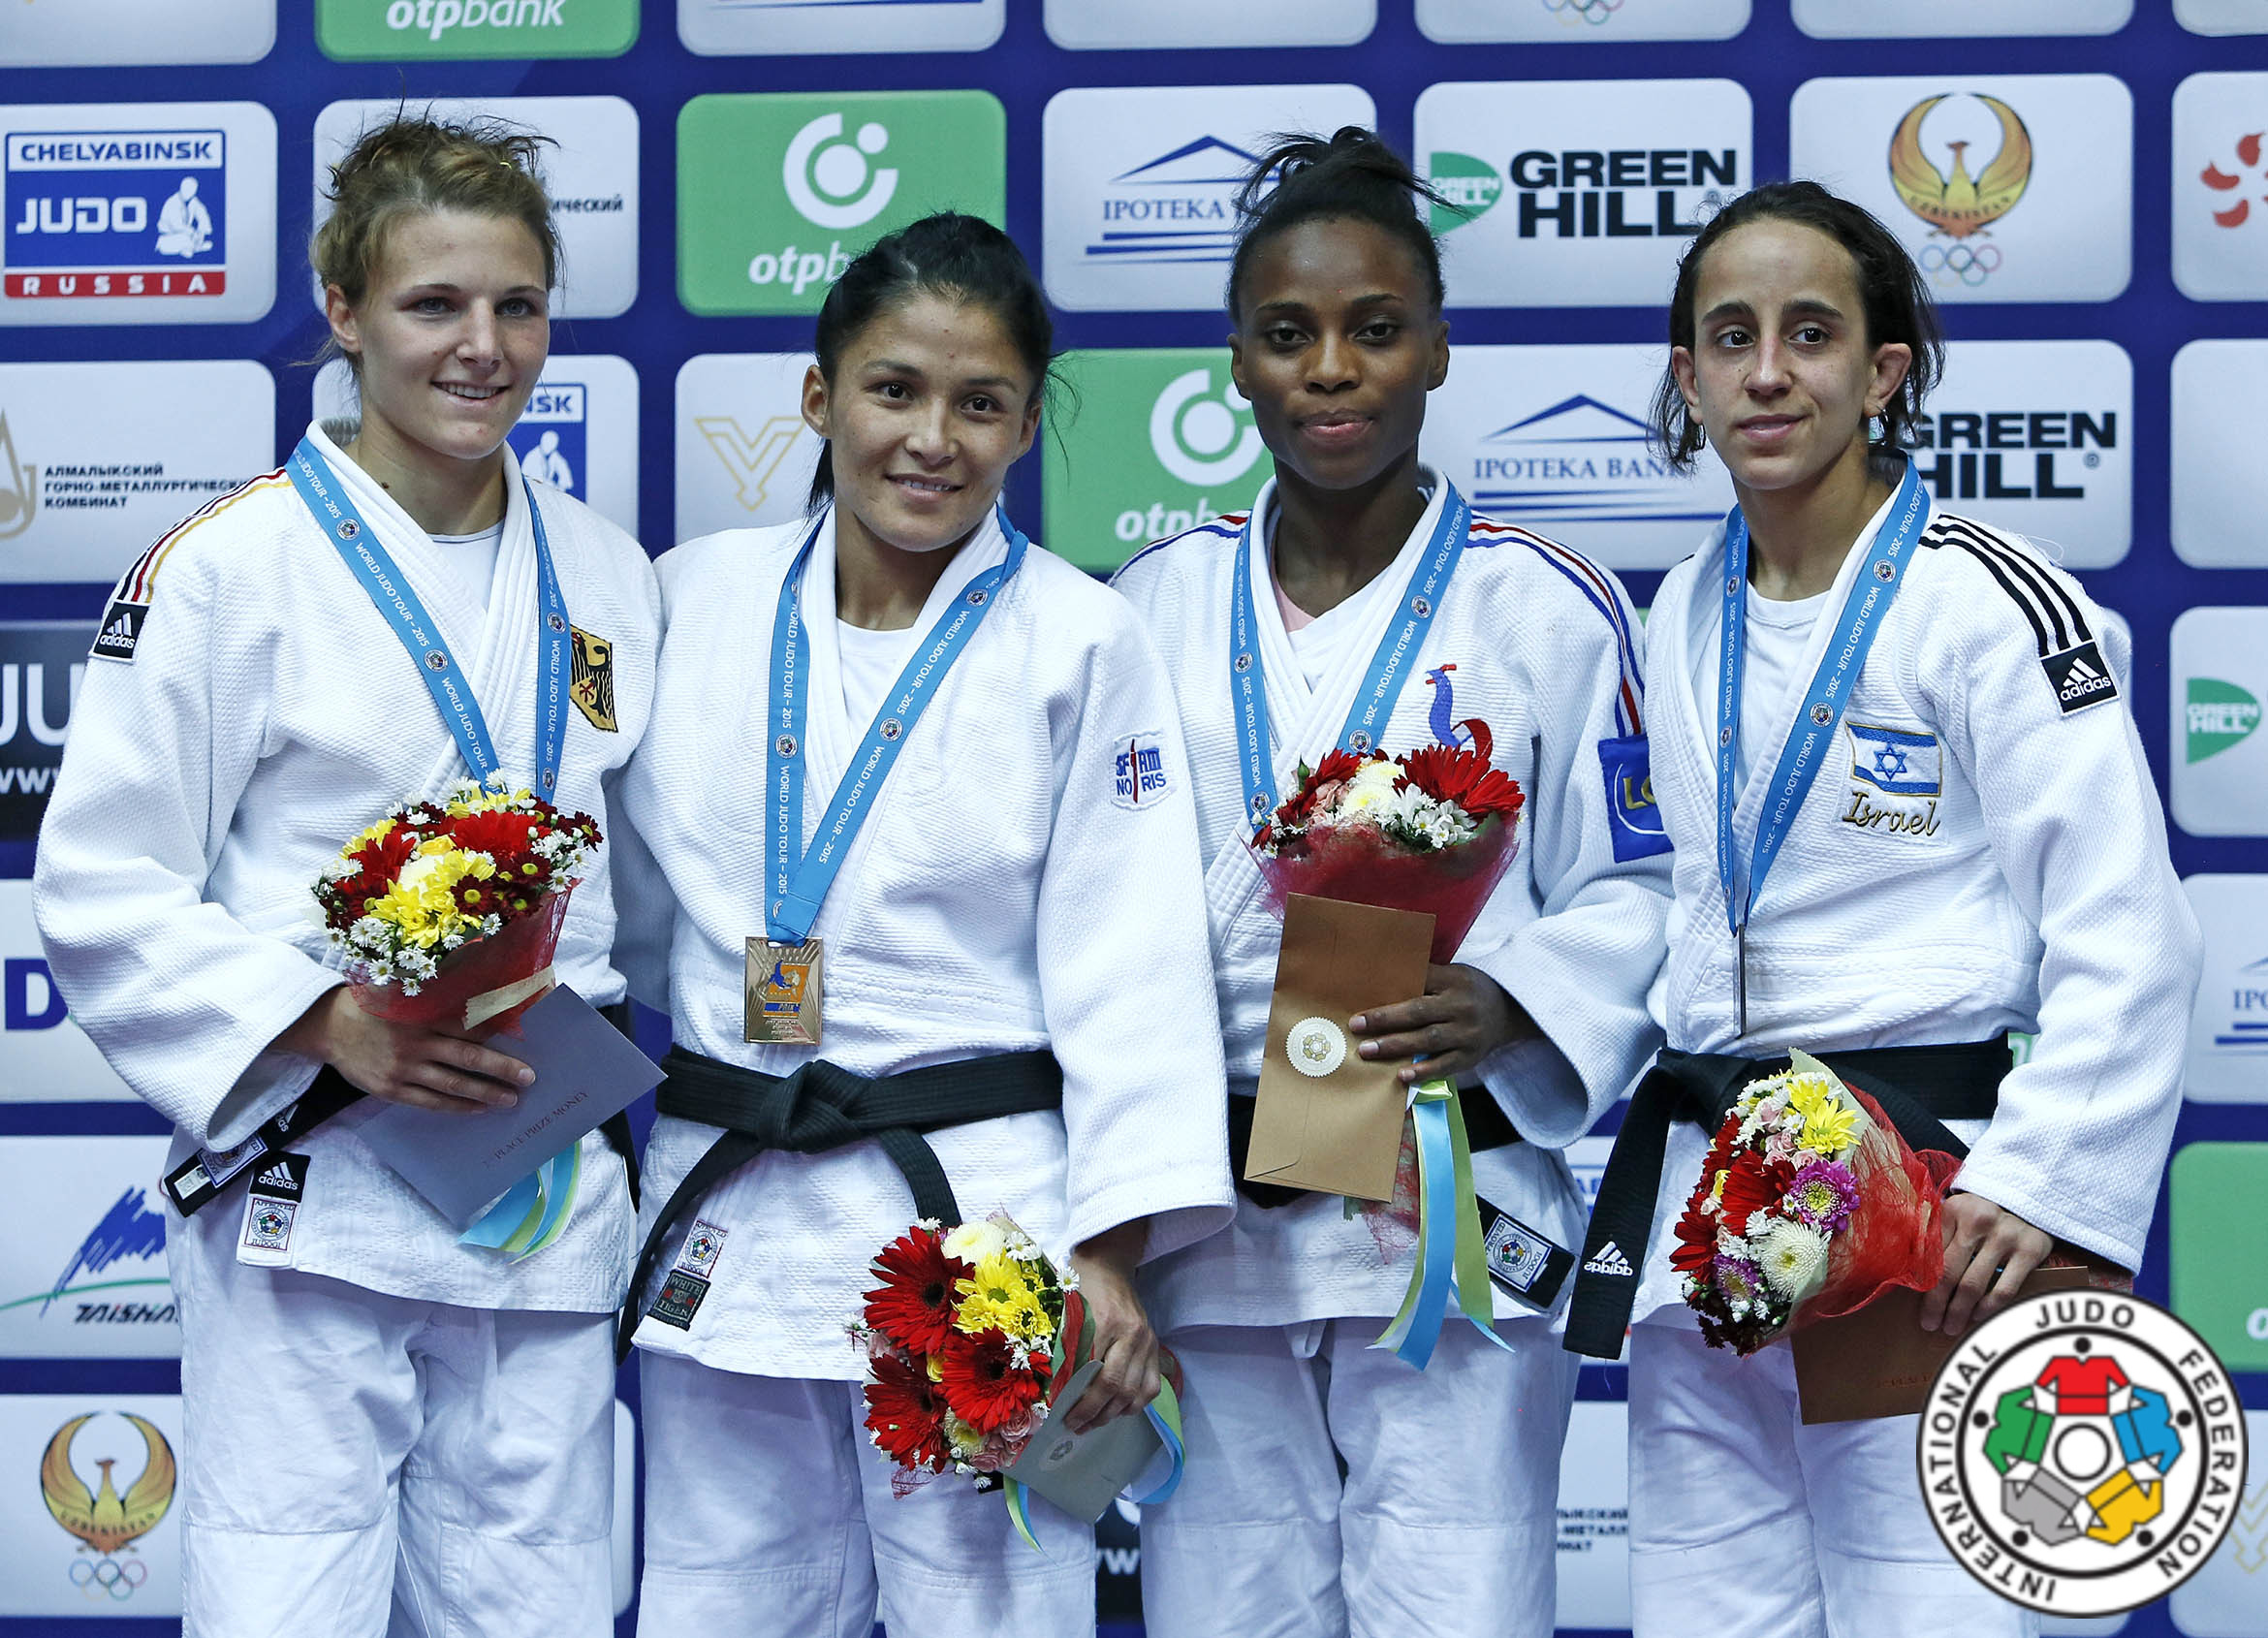 20151001_Tashkent_final52_ERTL, Maria (GER) - BABAMURATOVA, Guibadau (TKM)_podium